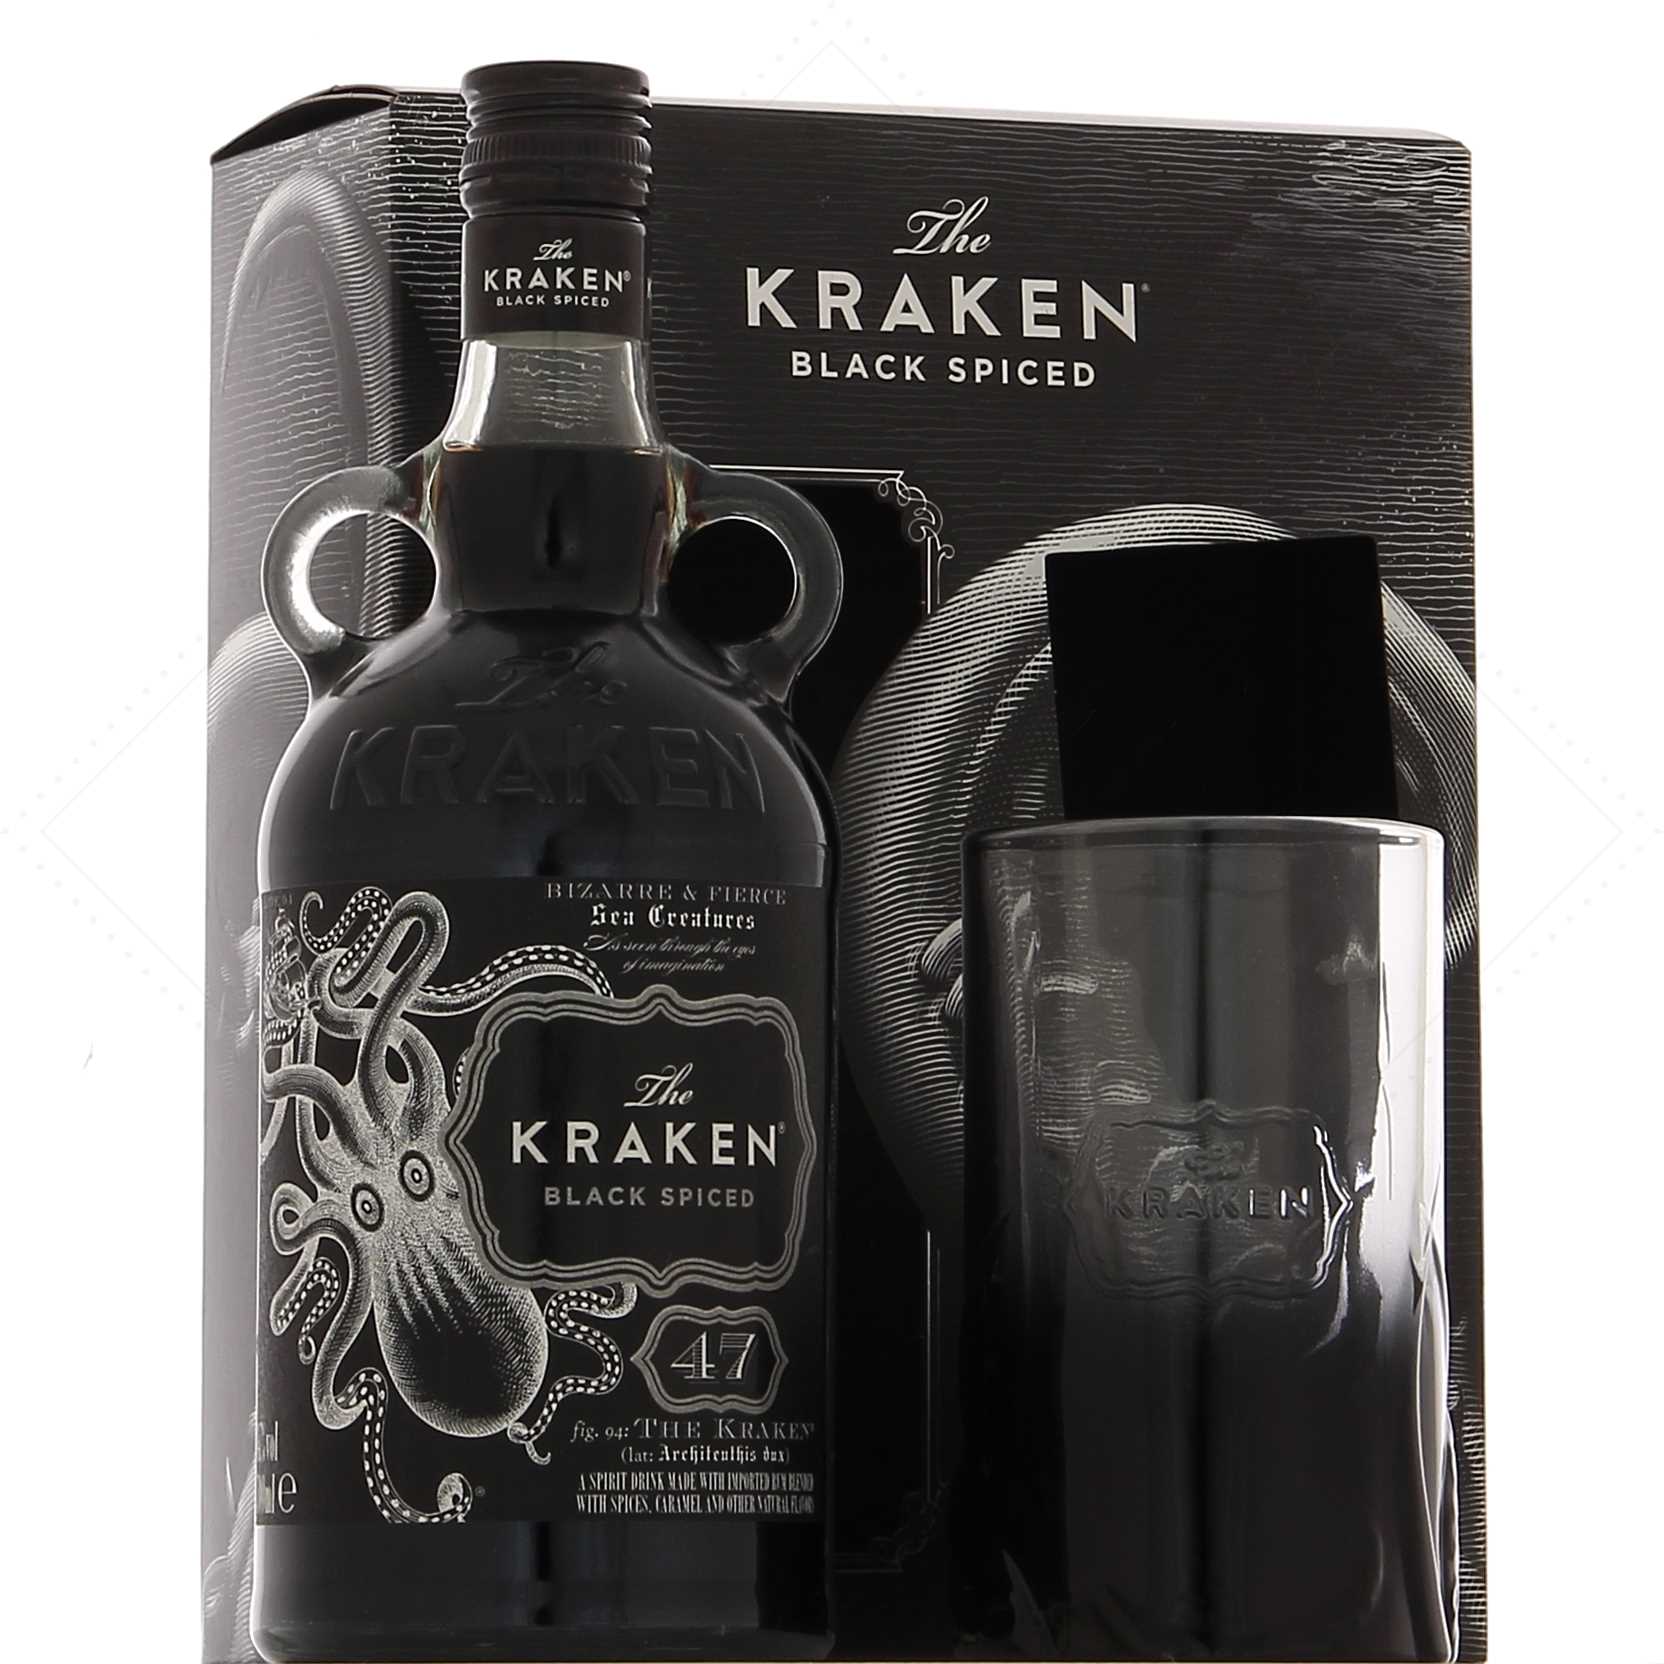 Kraken Black Spiced Perfect Storm 47° in 1 glass box